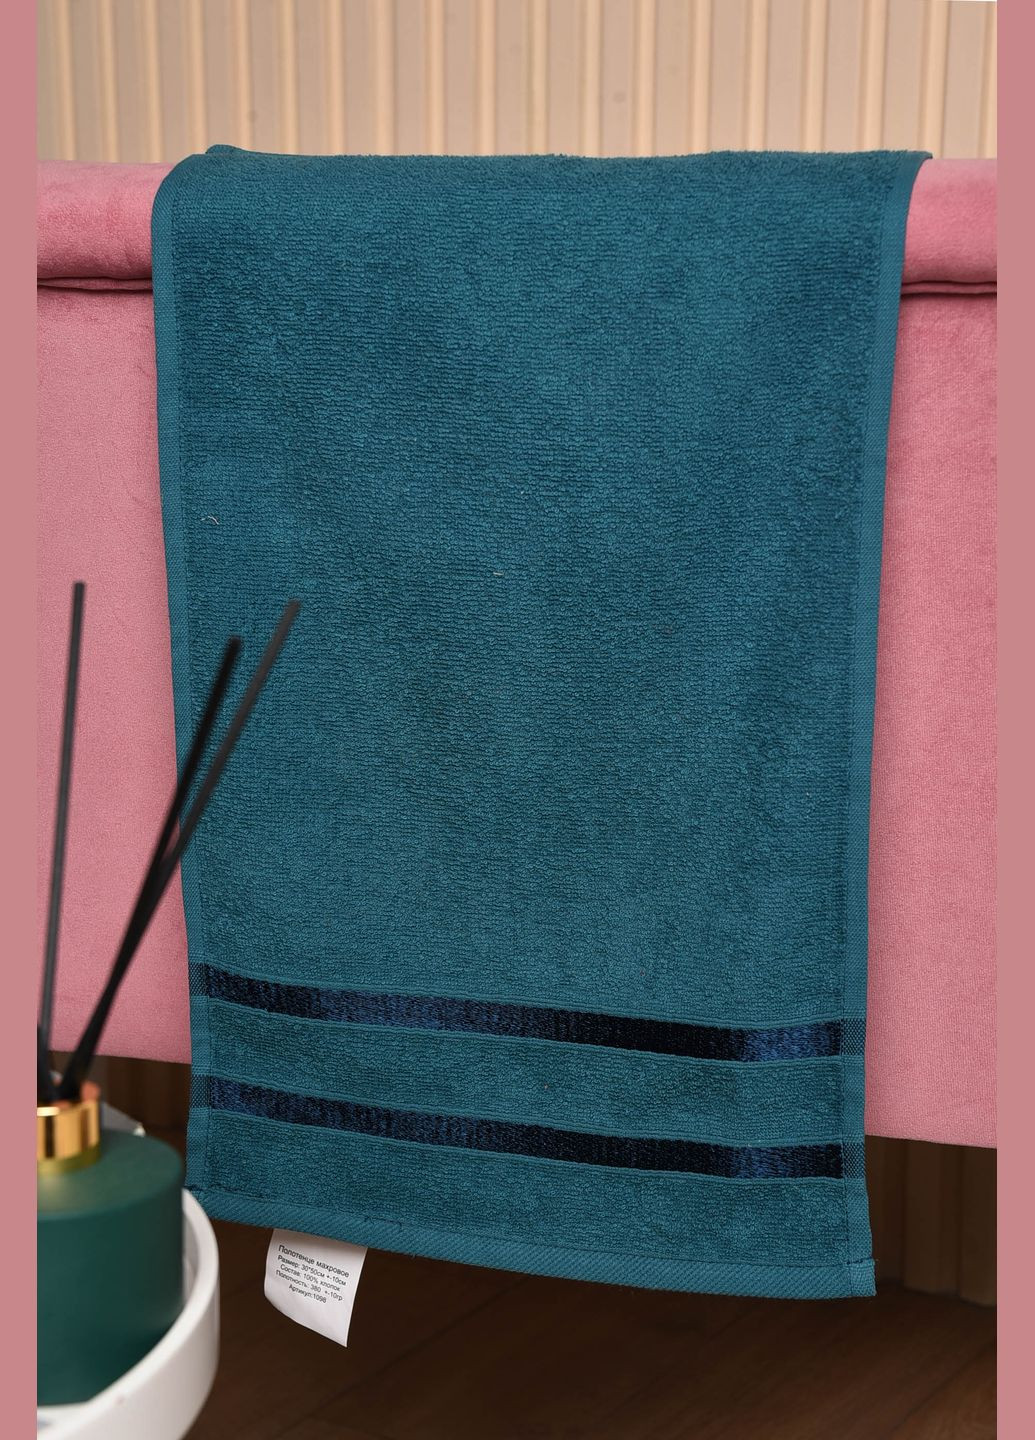 Let's Shop рушник кухонний махровий смарагдового кольору однотонний смарагдовий виробництво - Китай